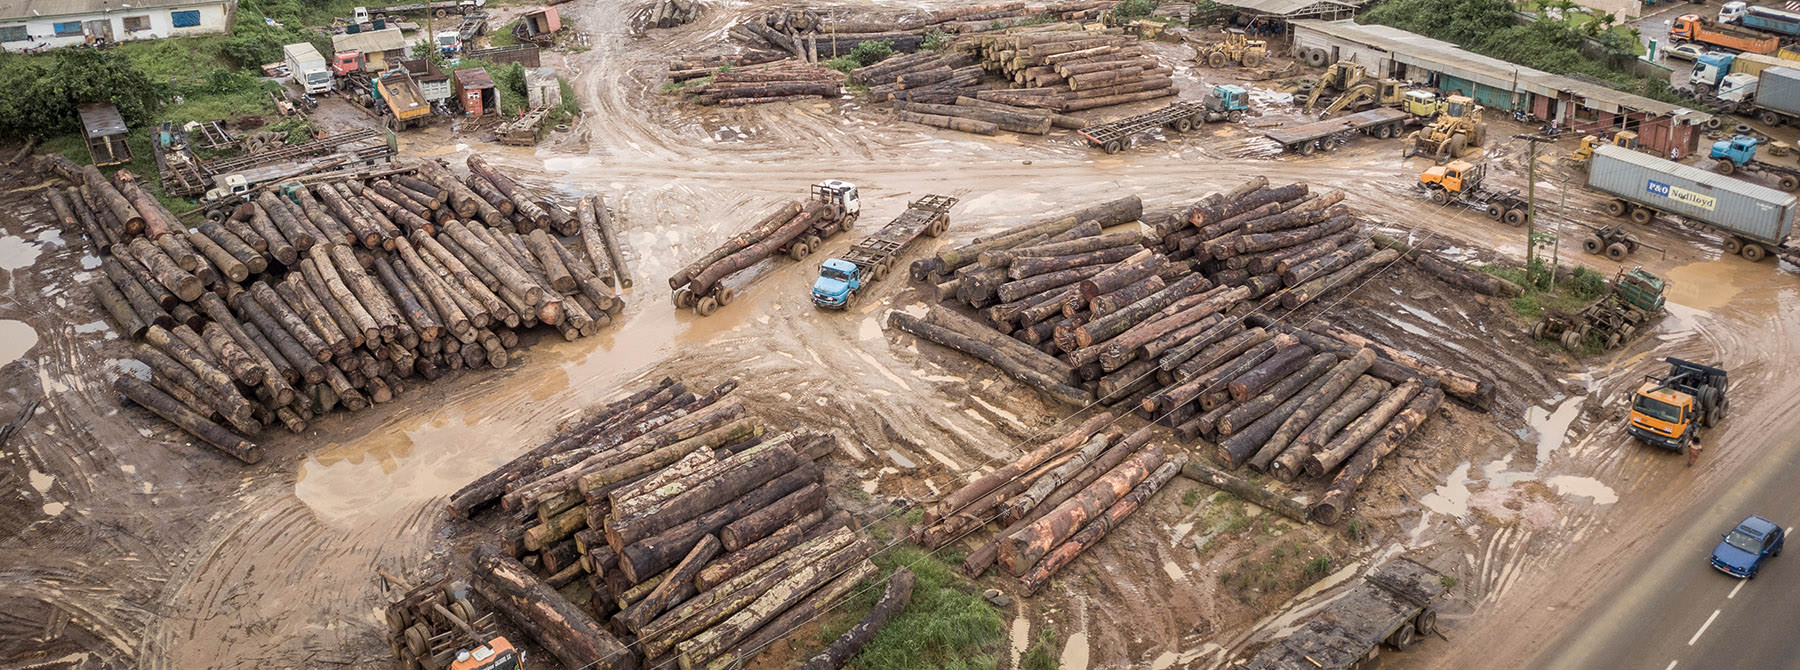 Log stockpile along the main road into Douala, Cameroon © Andrew Walmsley / TRAFFIC